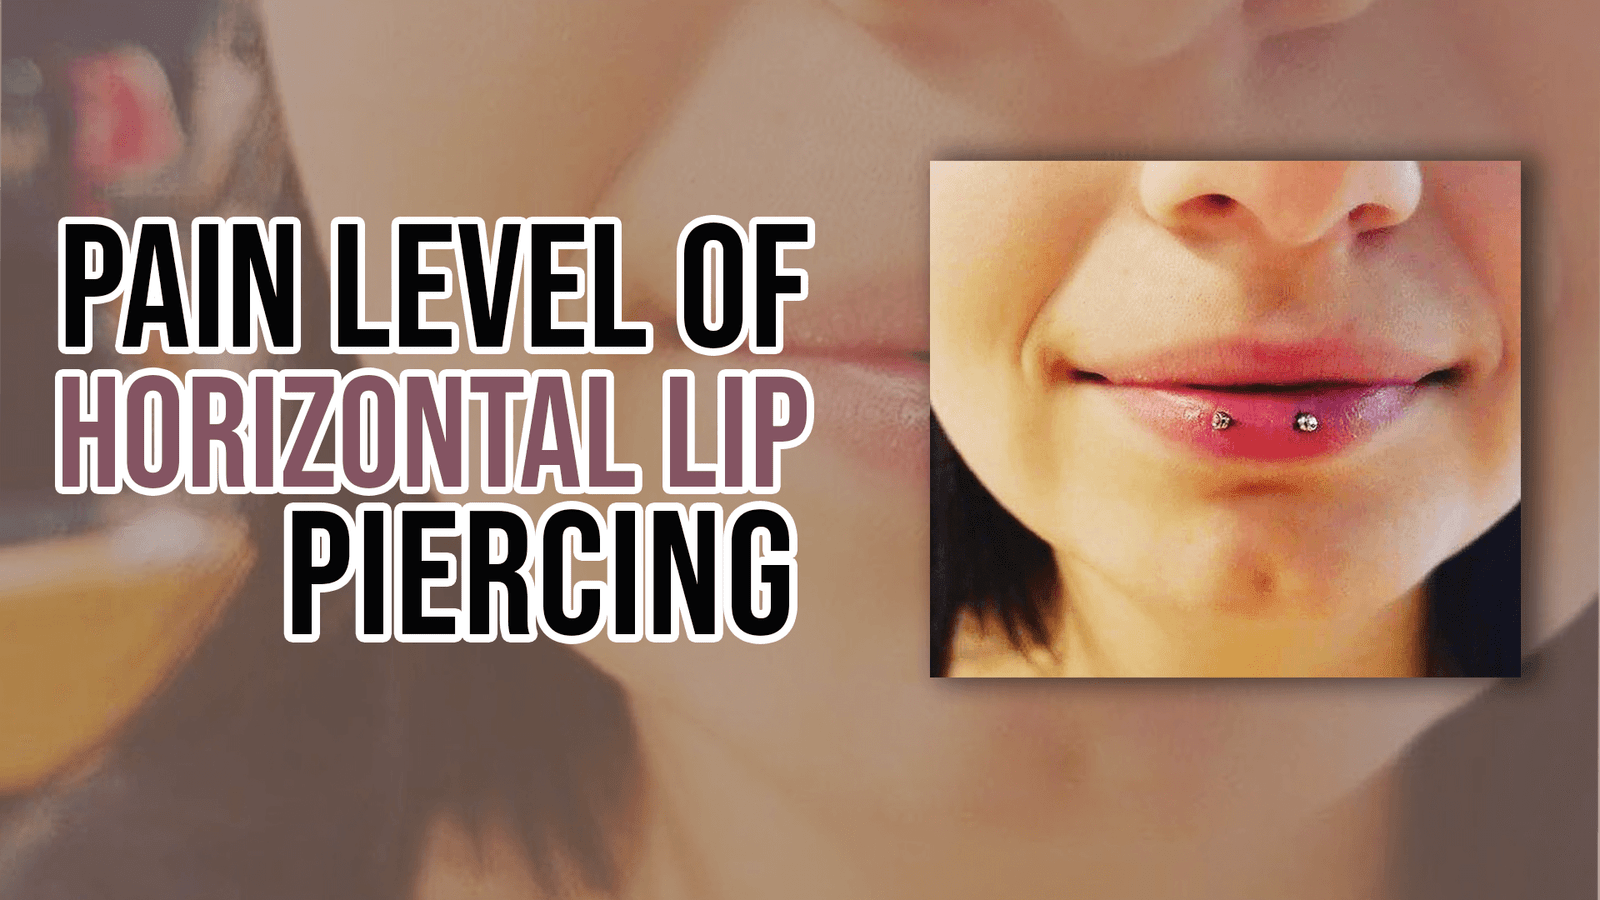 Pain Level of Horizontal Lip Piercing